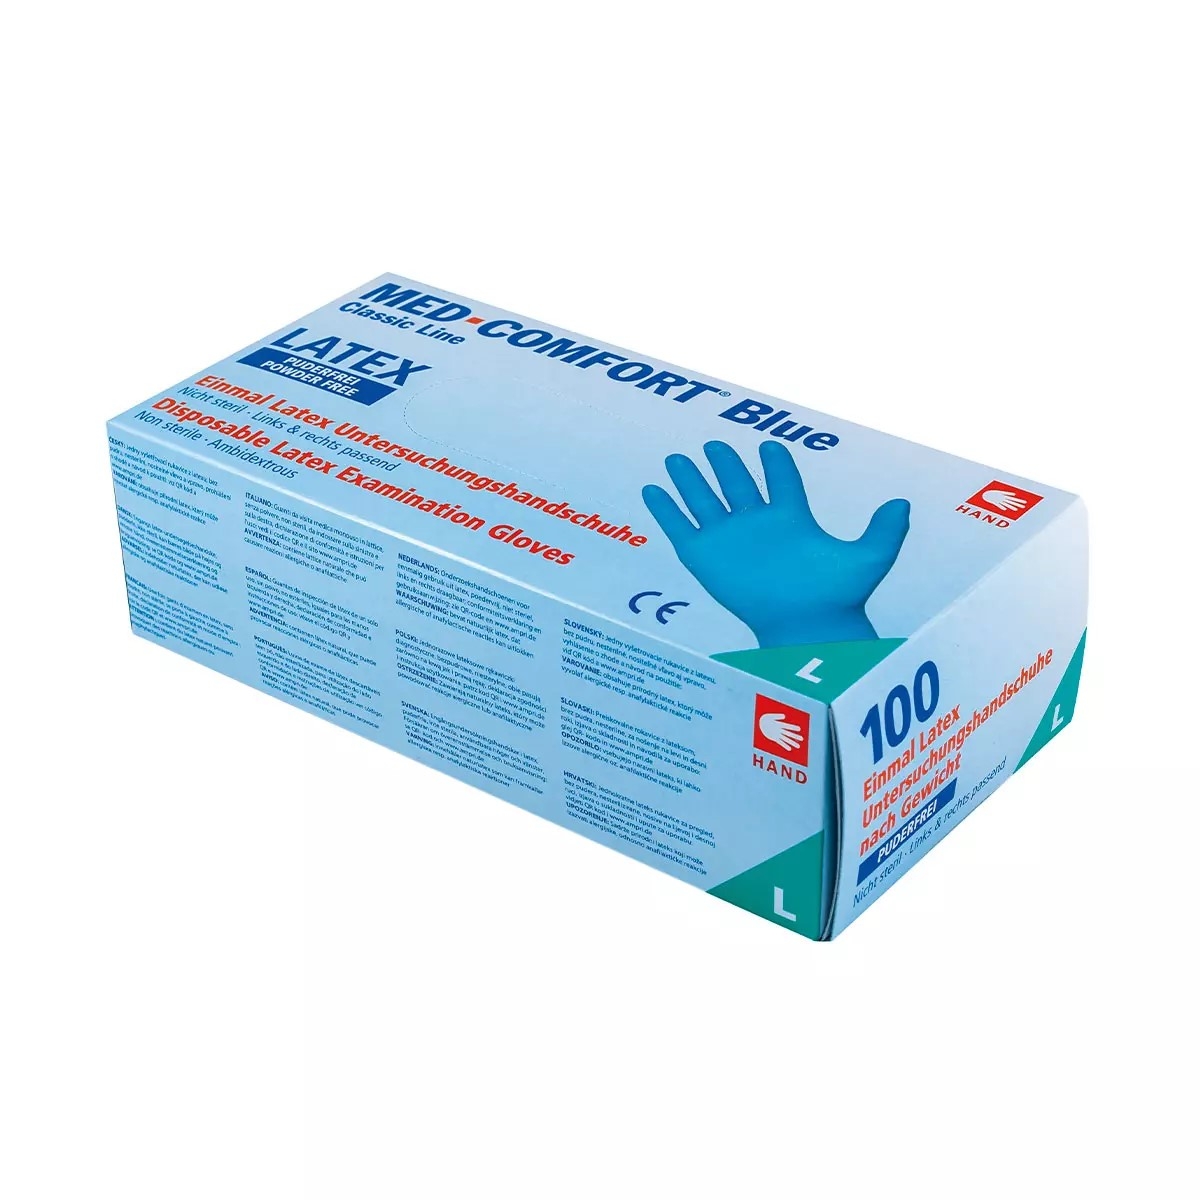 AMPRI-Hand-Schutz, Einweg-Latex-Einmal-Handschuhe, MED COMFORT BLUE, puderfrei, blau, Pkg  100 Stck, VE = 1 Pkg.